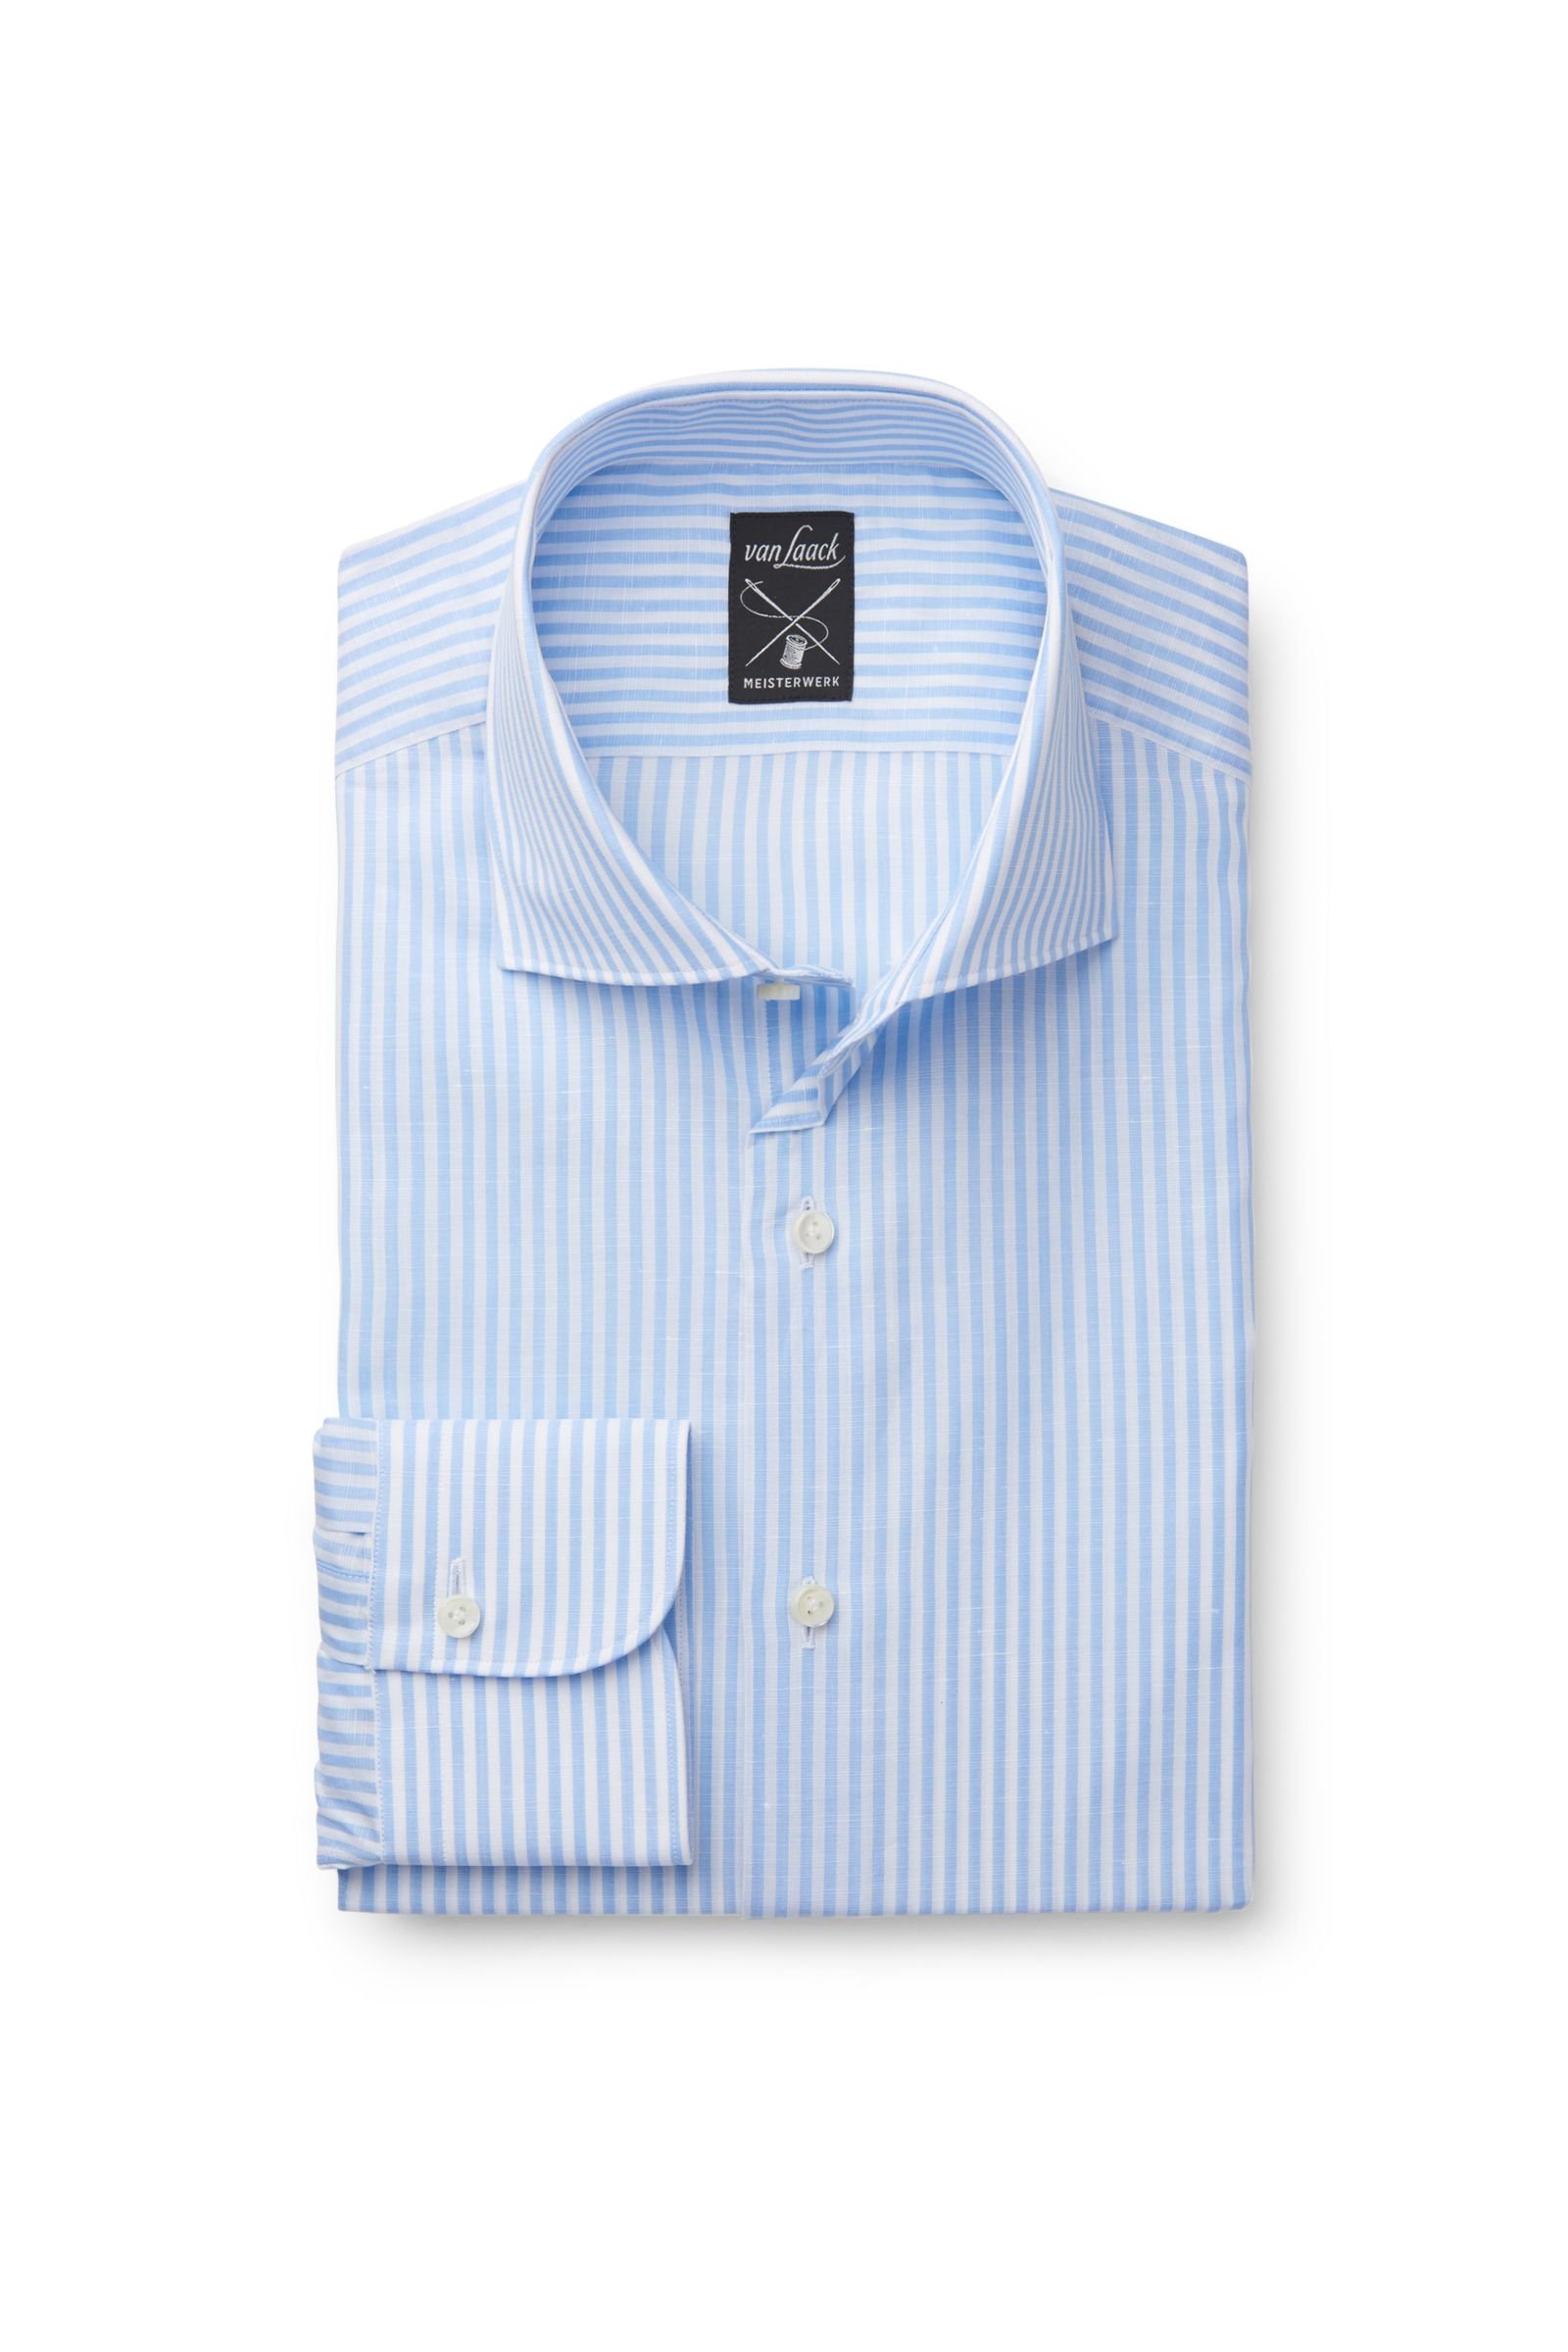 Business shirt 'Mivara Tailor Fit' shark collar light blue striped